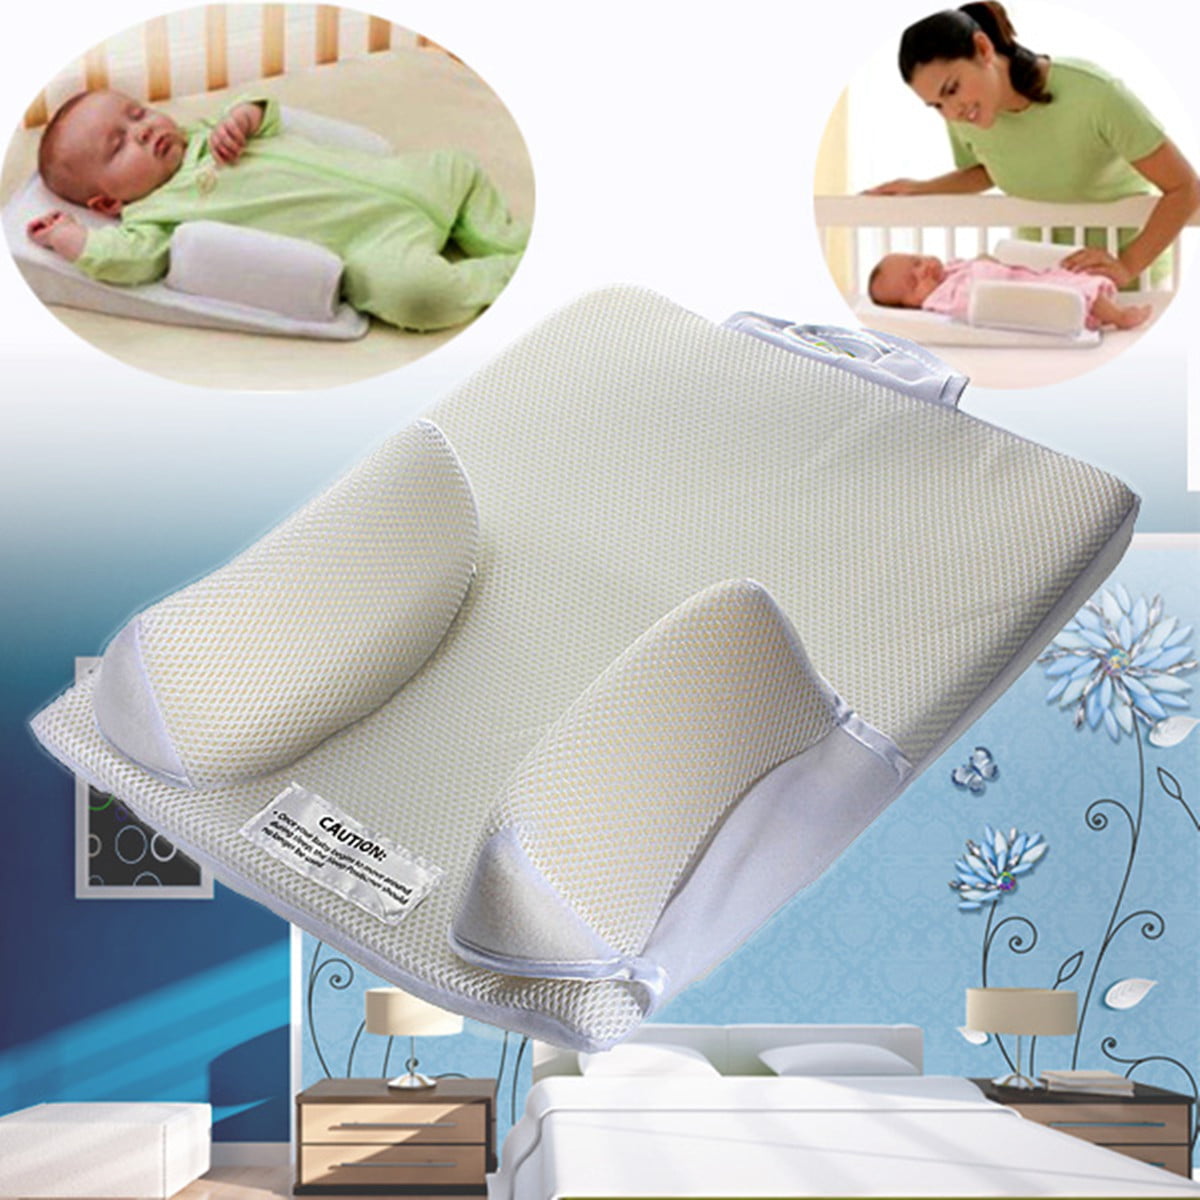 infant sleeping pillow